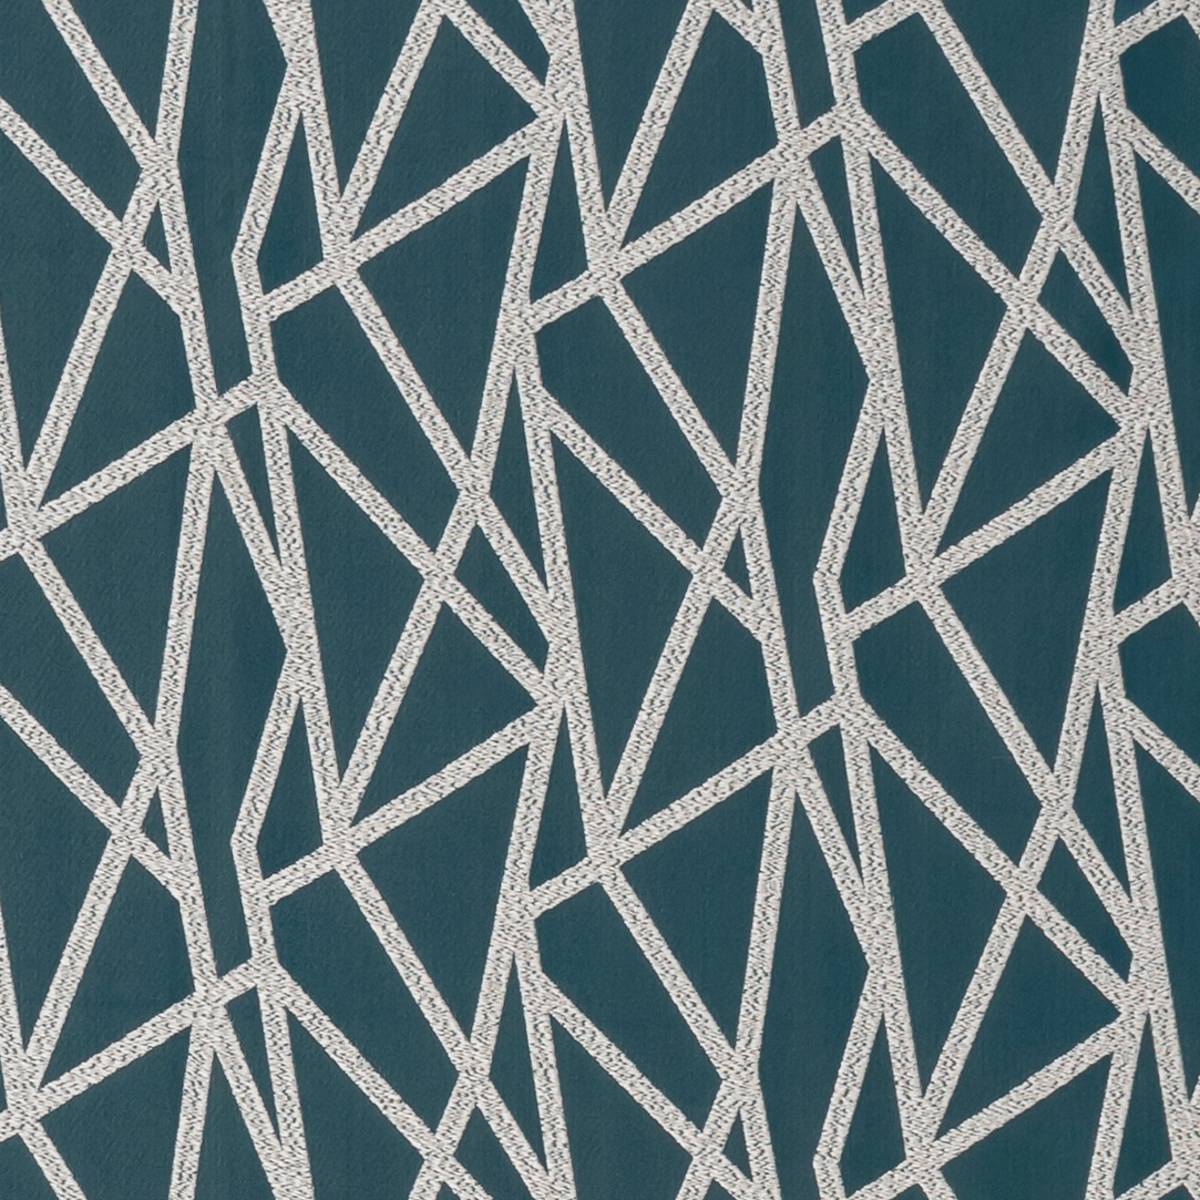 Geomo Kingfisher Fabric by Studio G